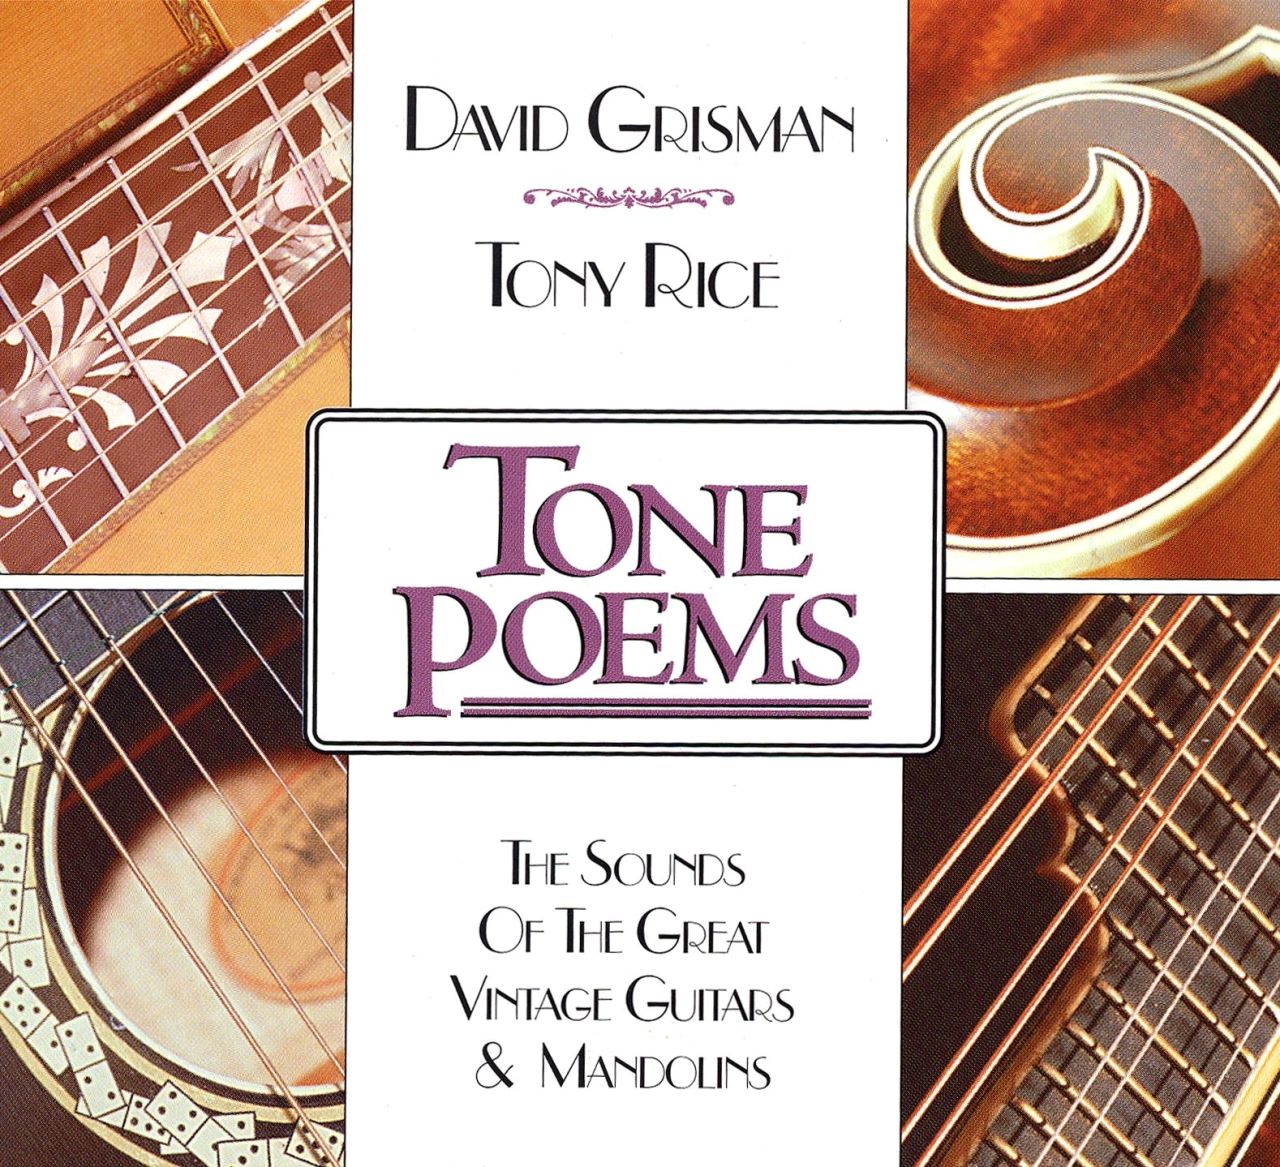 David Grisman & Tony Rice – Tone Poems cover album